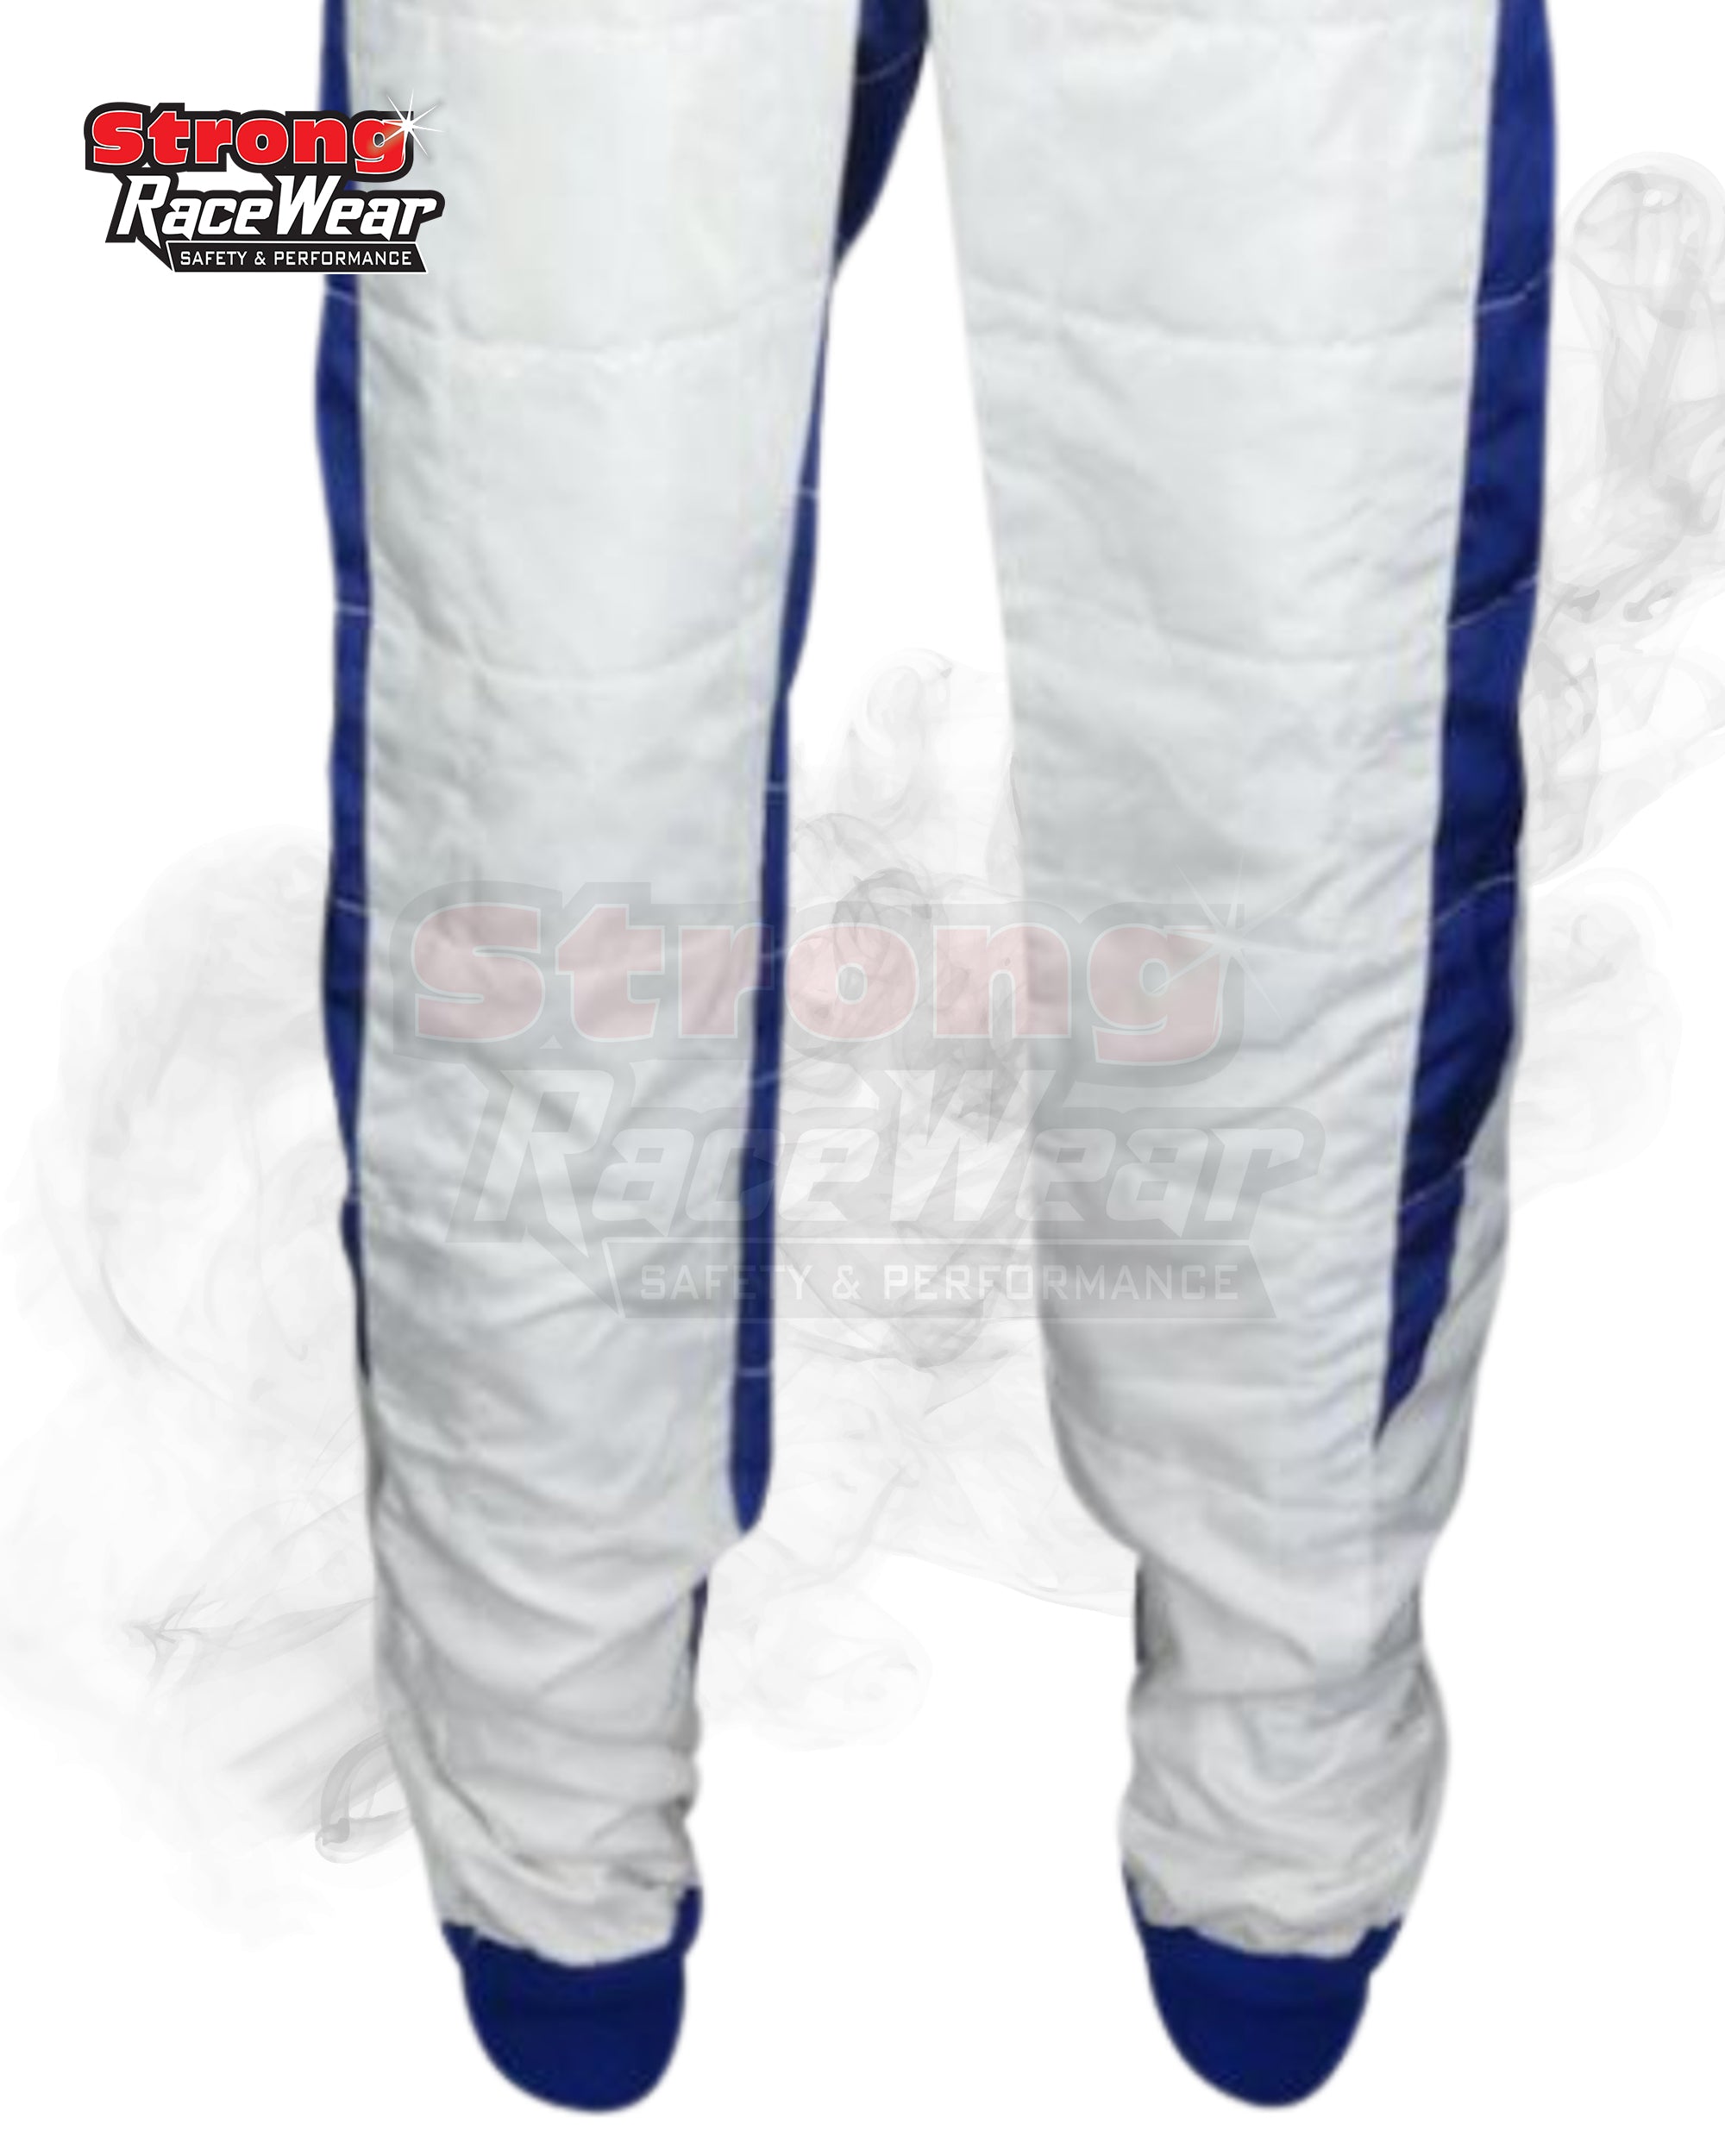 2005 Mark Webber BMW Williams F1 Racing Suit